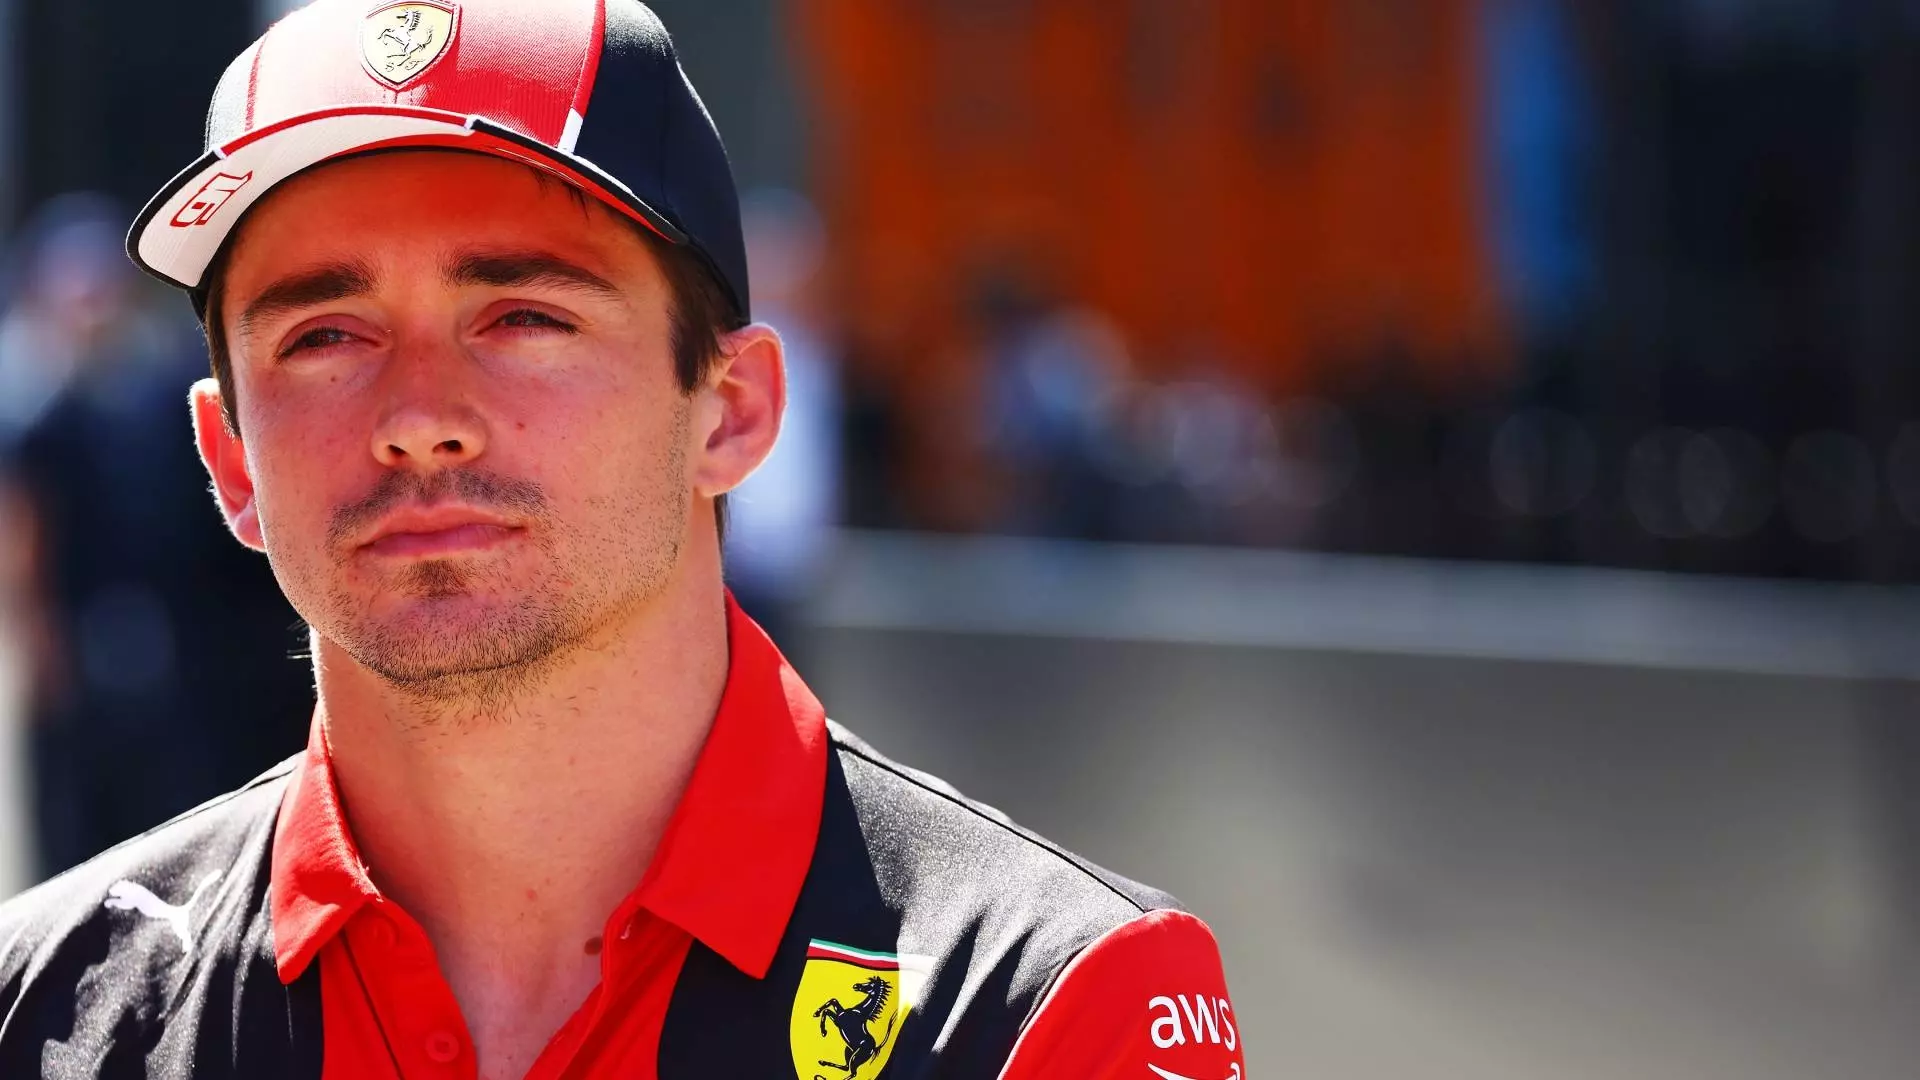 F1, Charles Leclerc è categorico: “Devo migliorare”